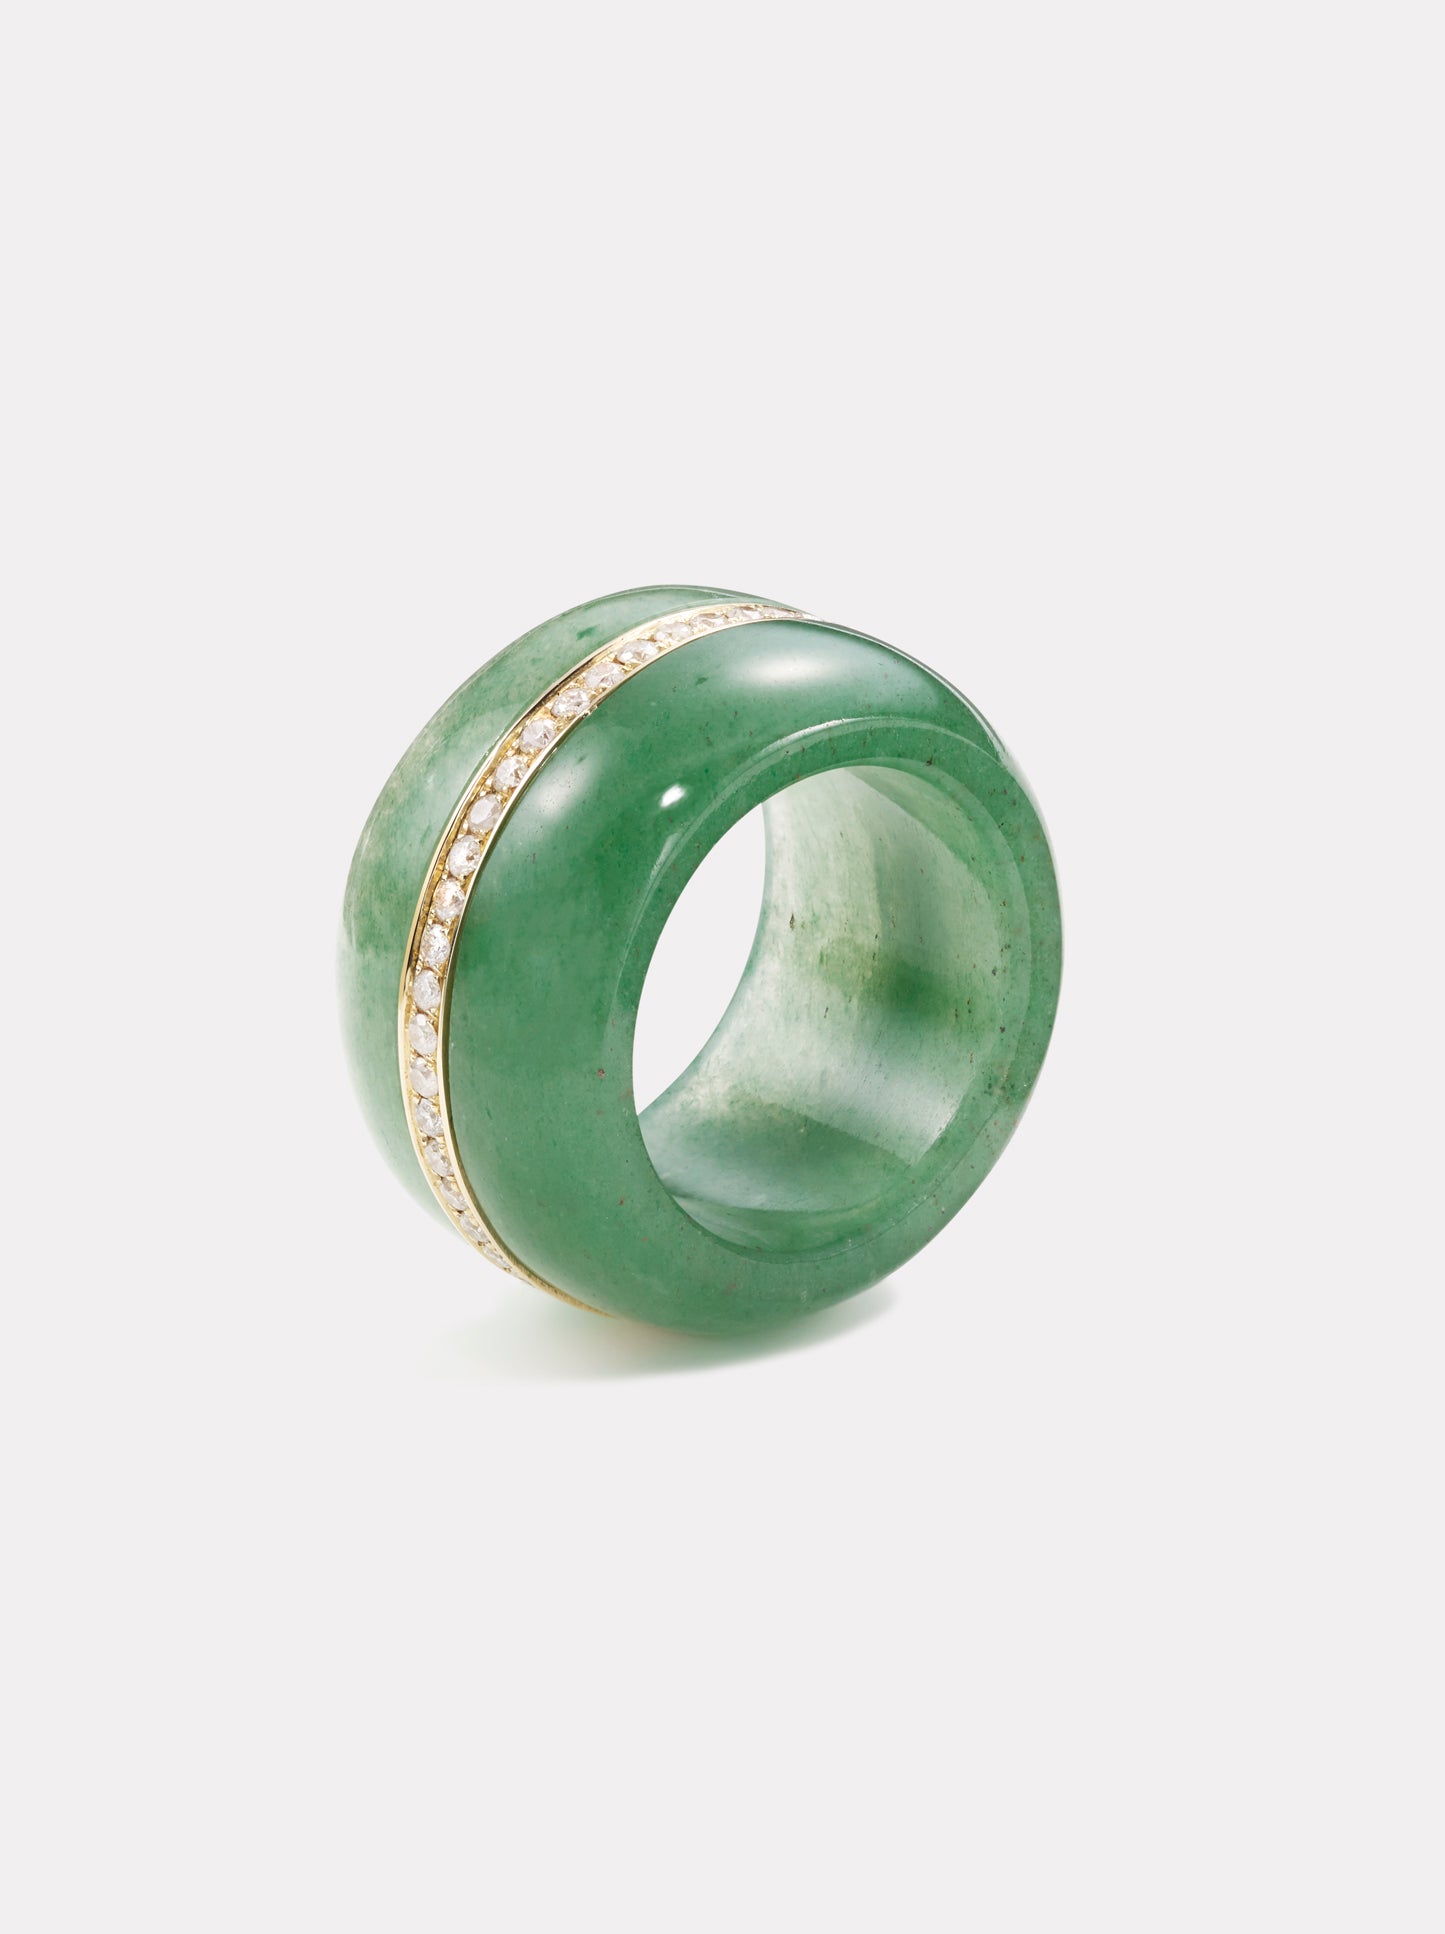 Diamond Pebble Cocktail Ring in Green Aventurine